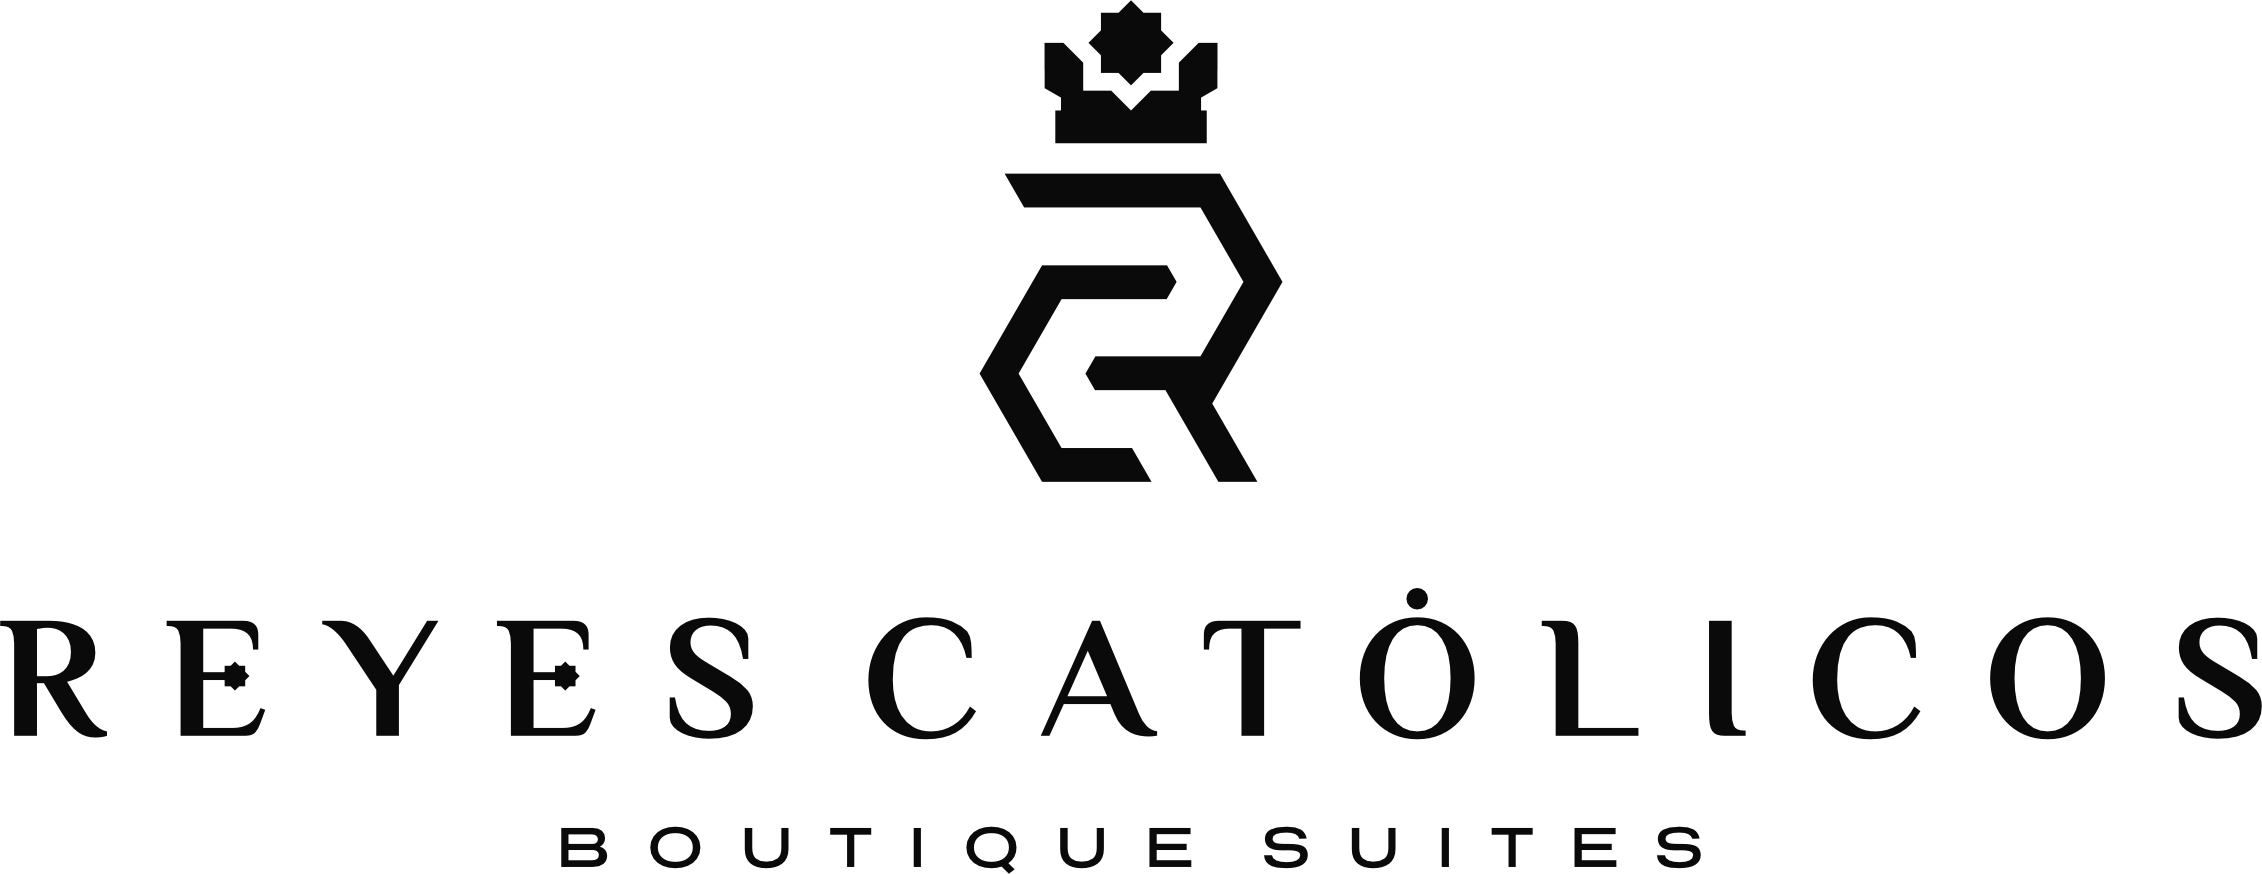 logo_boutique_suite_reyes_catolicos